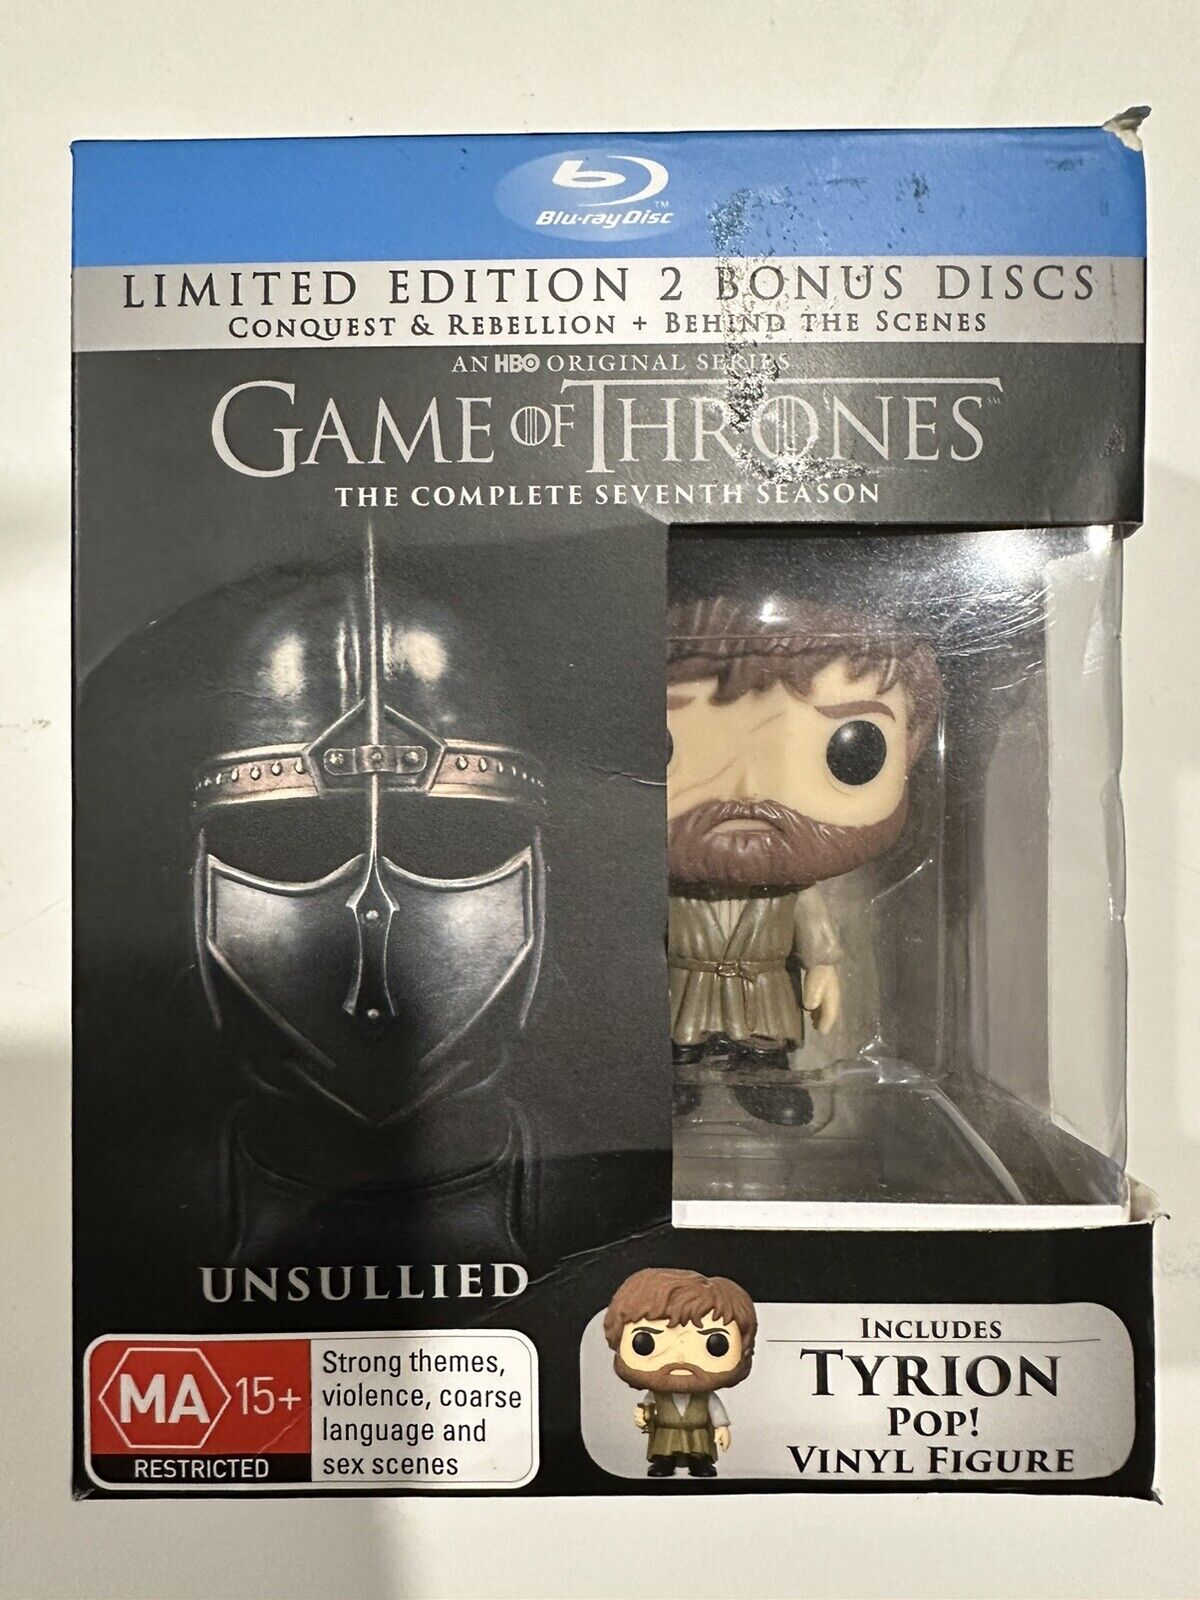 Game of Thrones - Funko Pop Vinyl Figure and Season 7 Blu Ray Disc - TYRION #50